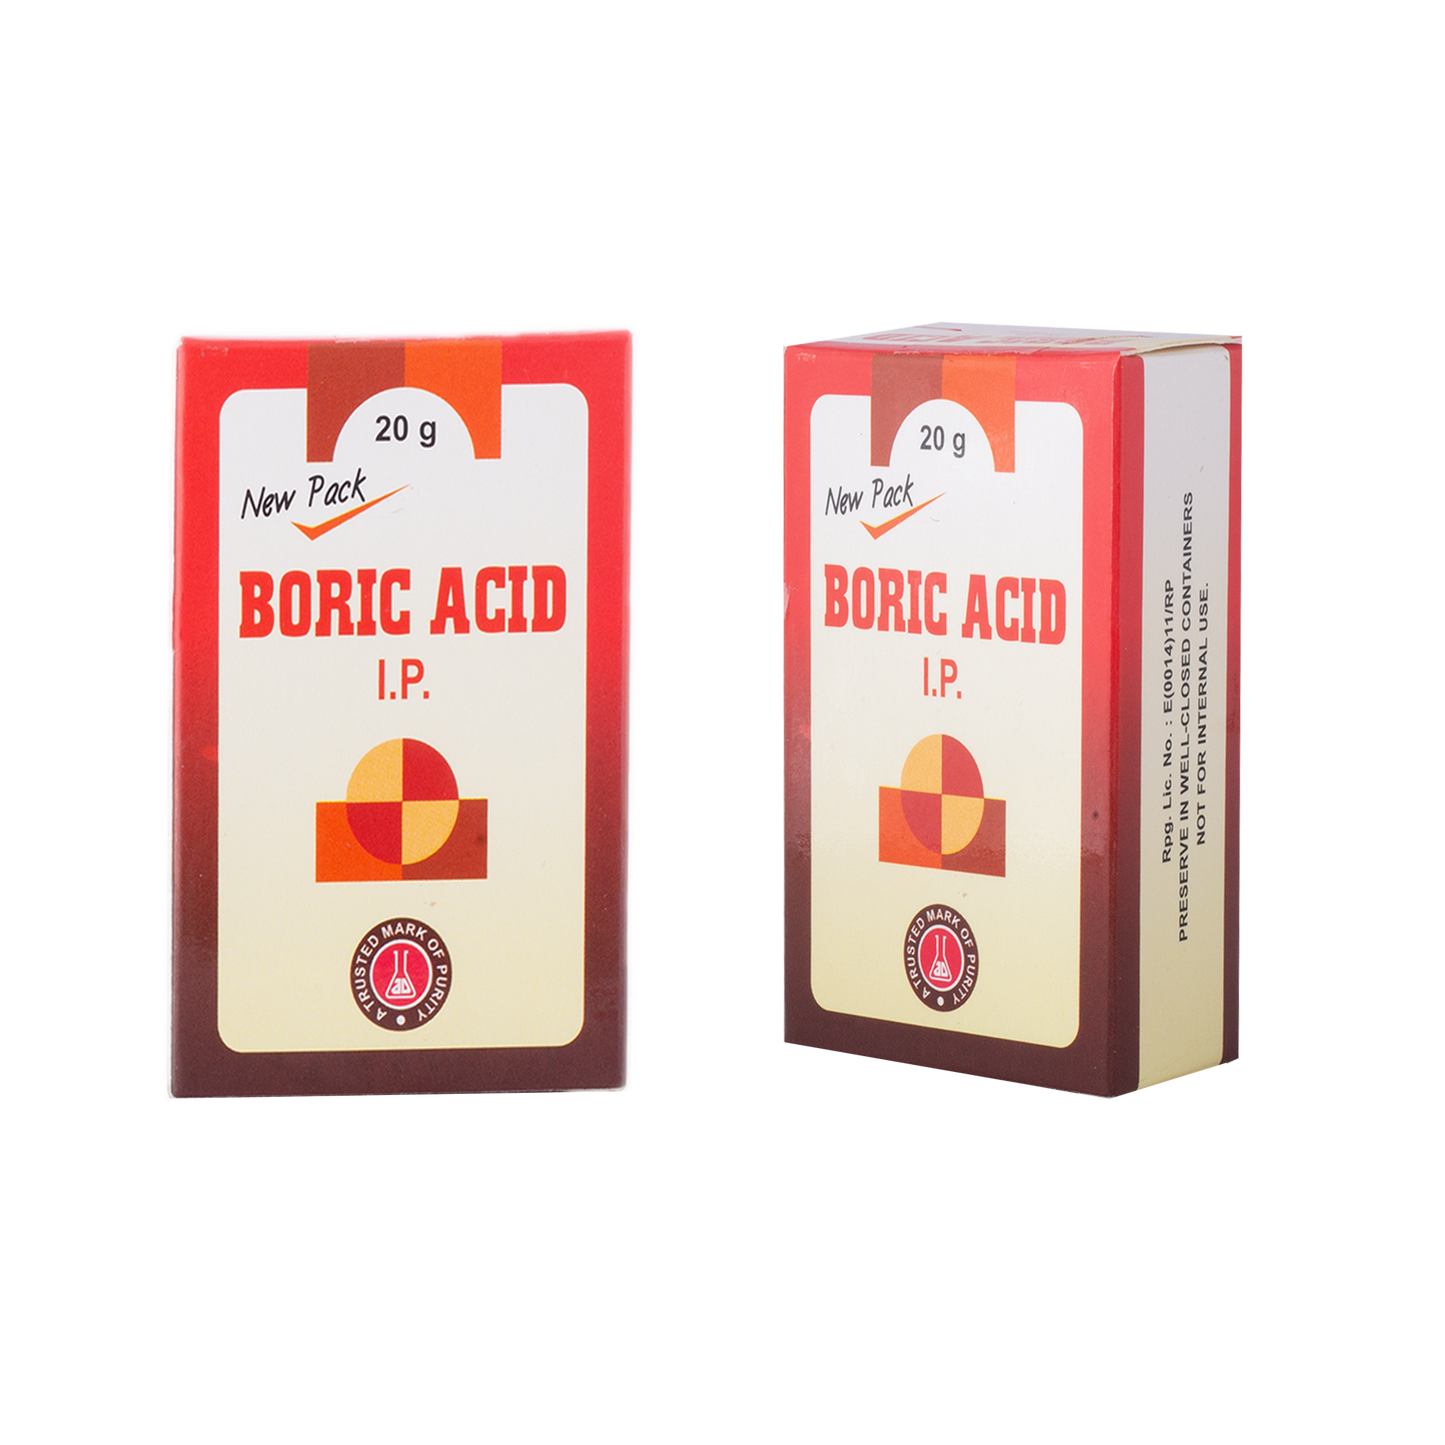 Boric Acid I.P.